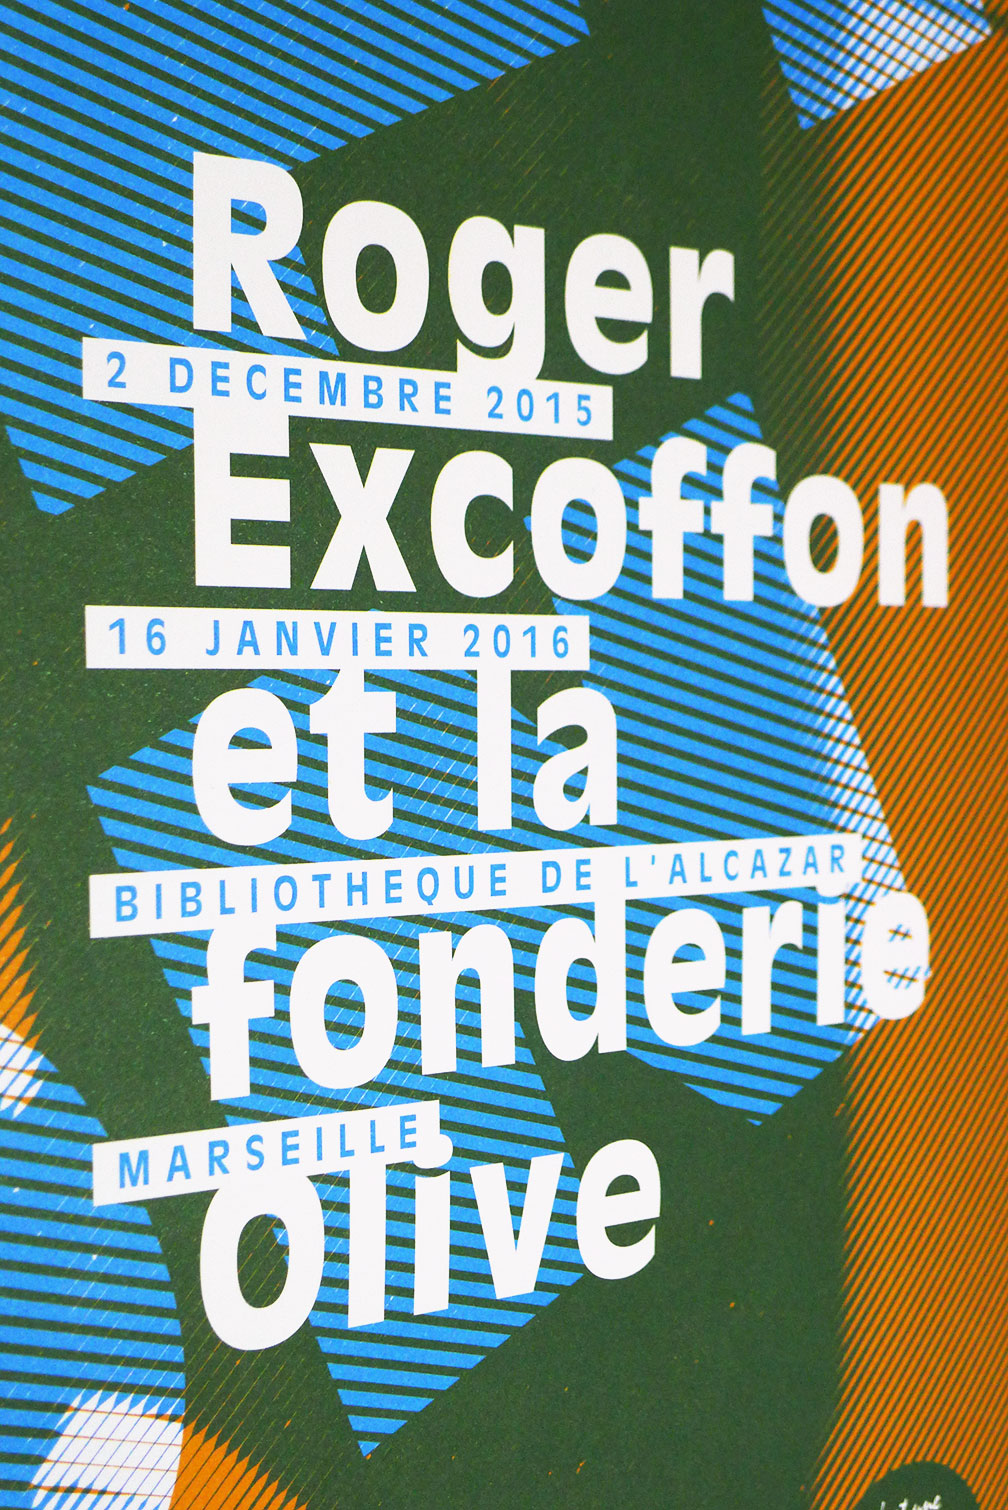 Roger-excoffon-olive-2.jpg